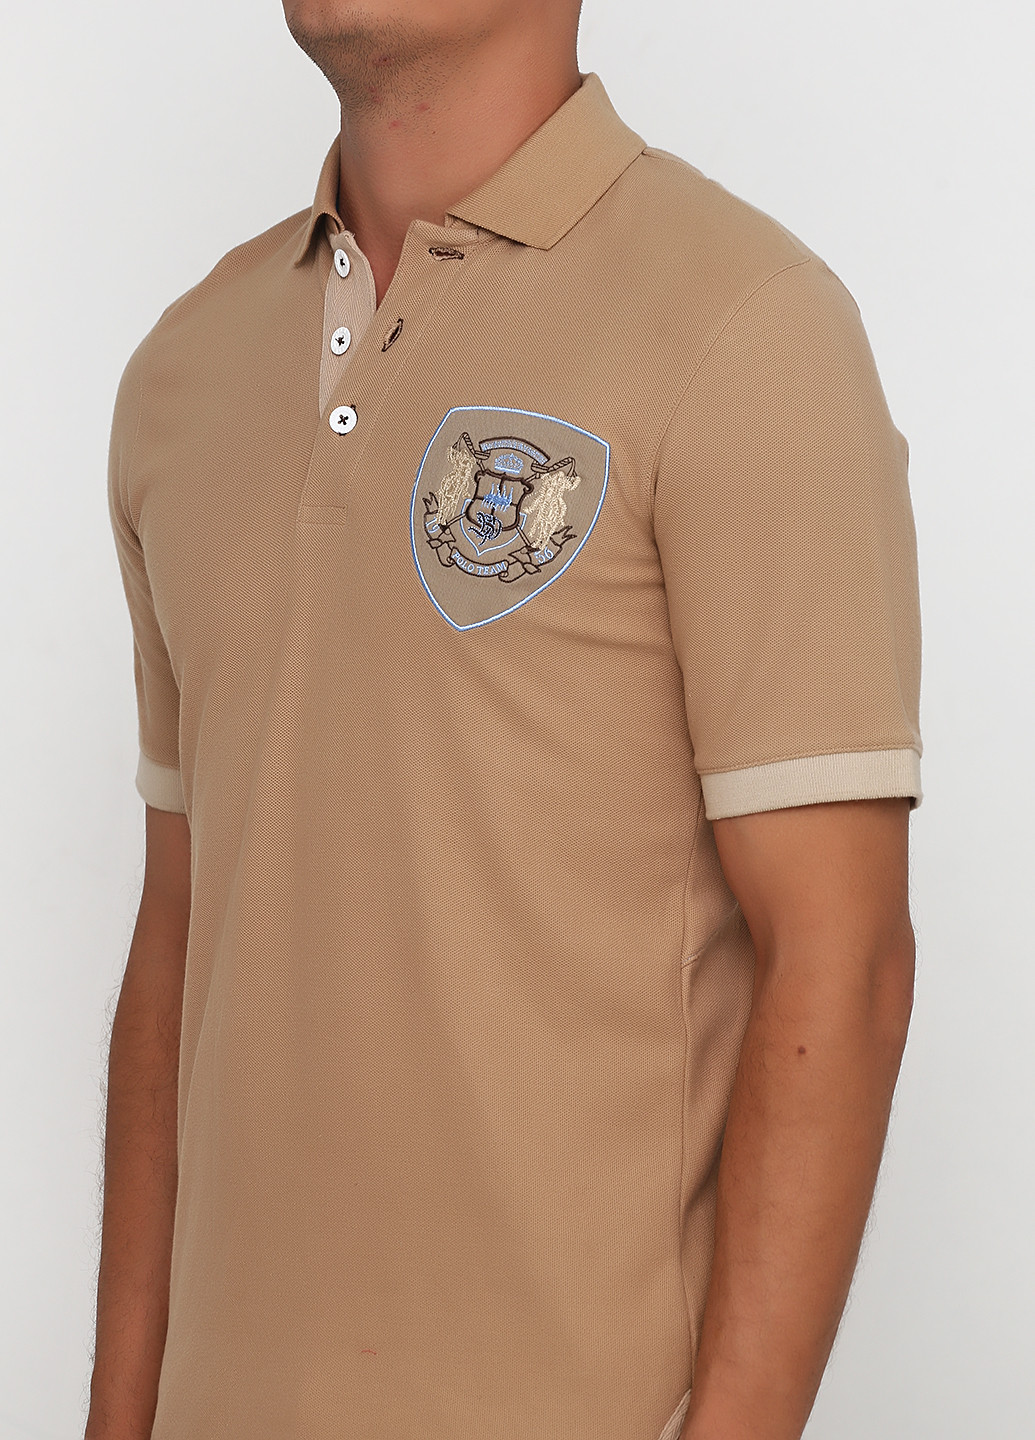 Бежевая футболка-поло для мужчин Van Santen с логотипом